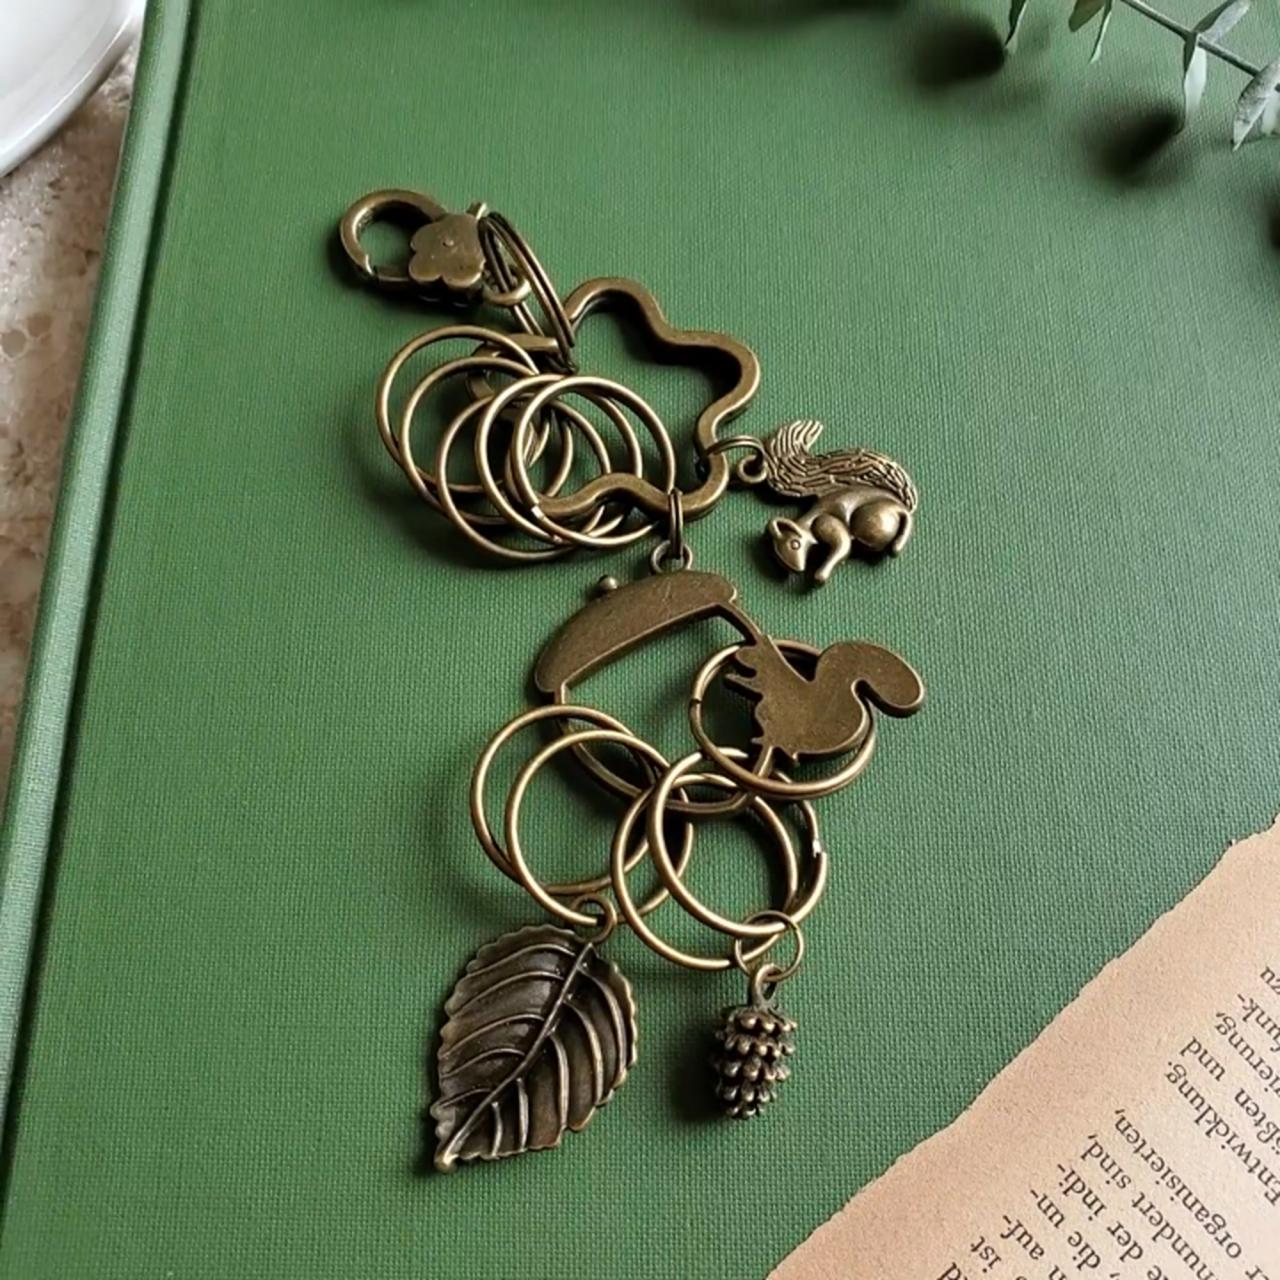 Vintage Squirrel Leaf Key Chain, Bronze Metal Keychain, Key Charm, Squirrel Leaf Charm, Animal Key Chain, Gift For Her